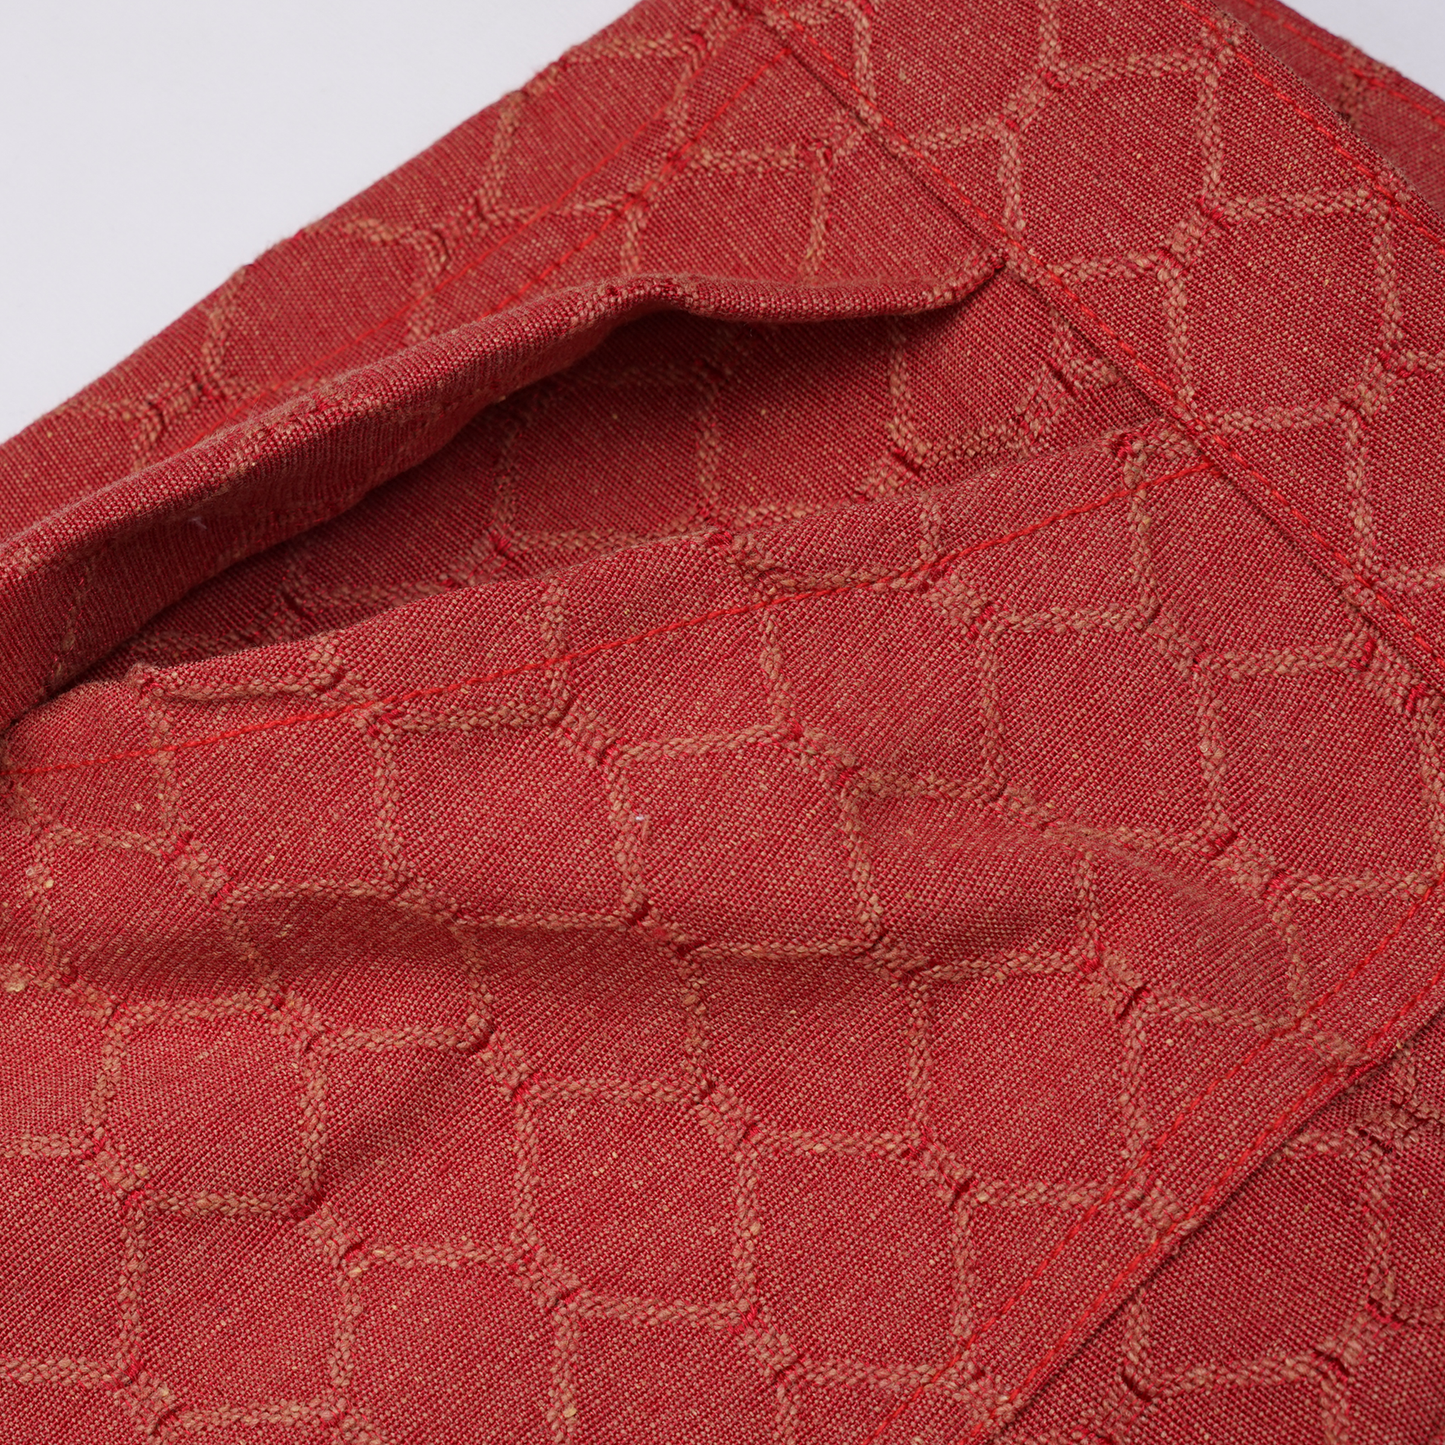 Lombard Pants Picante Red - MATA CLOTHiER